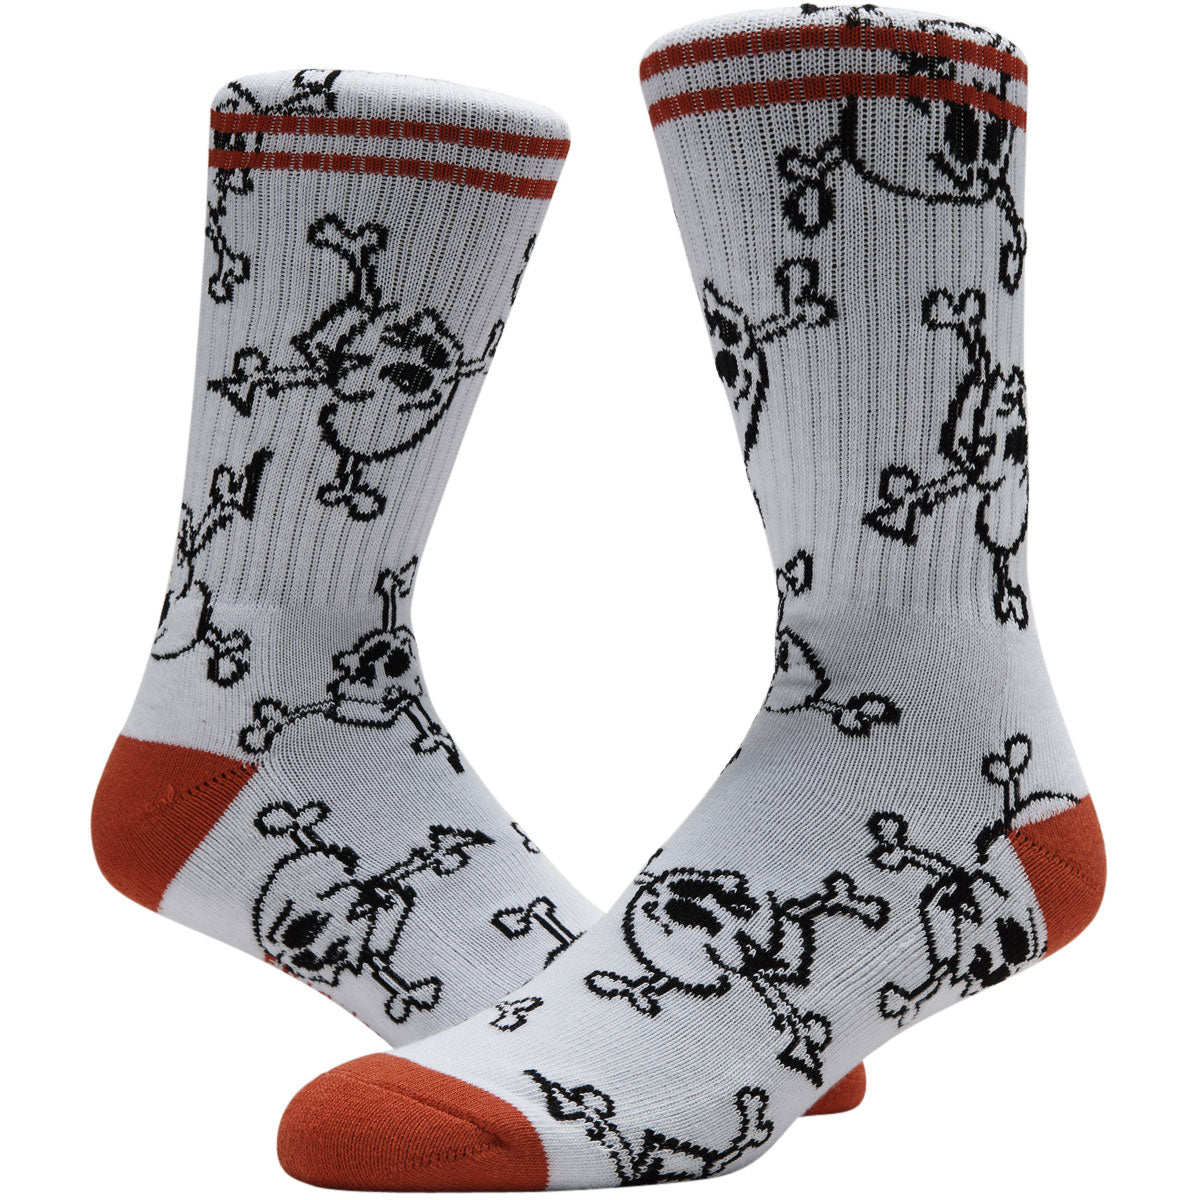 Krooked Style Socks - White/Black/Red image 2